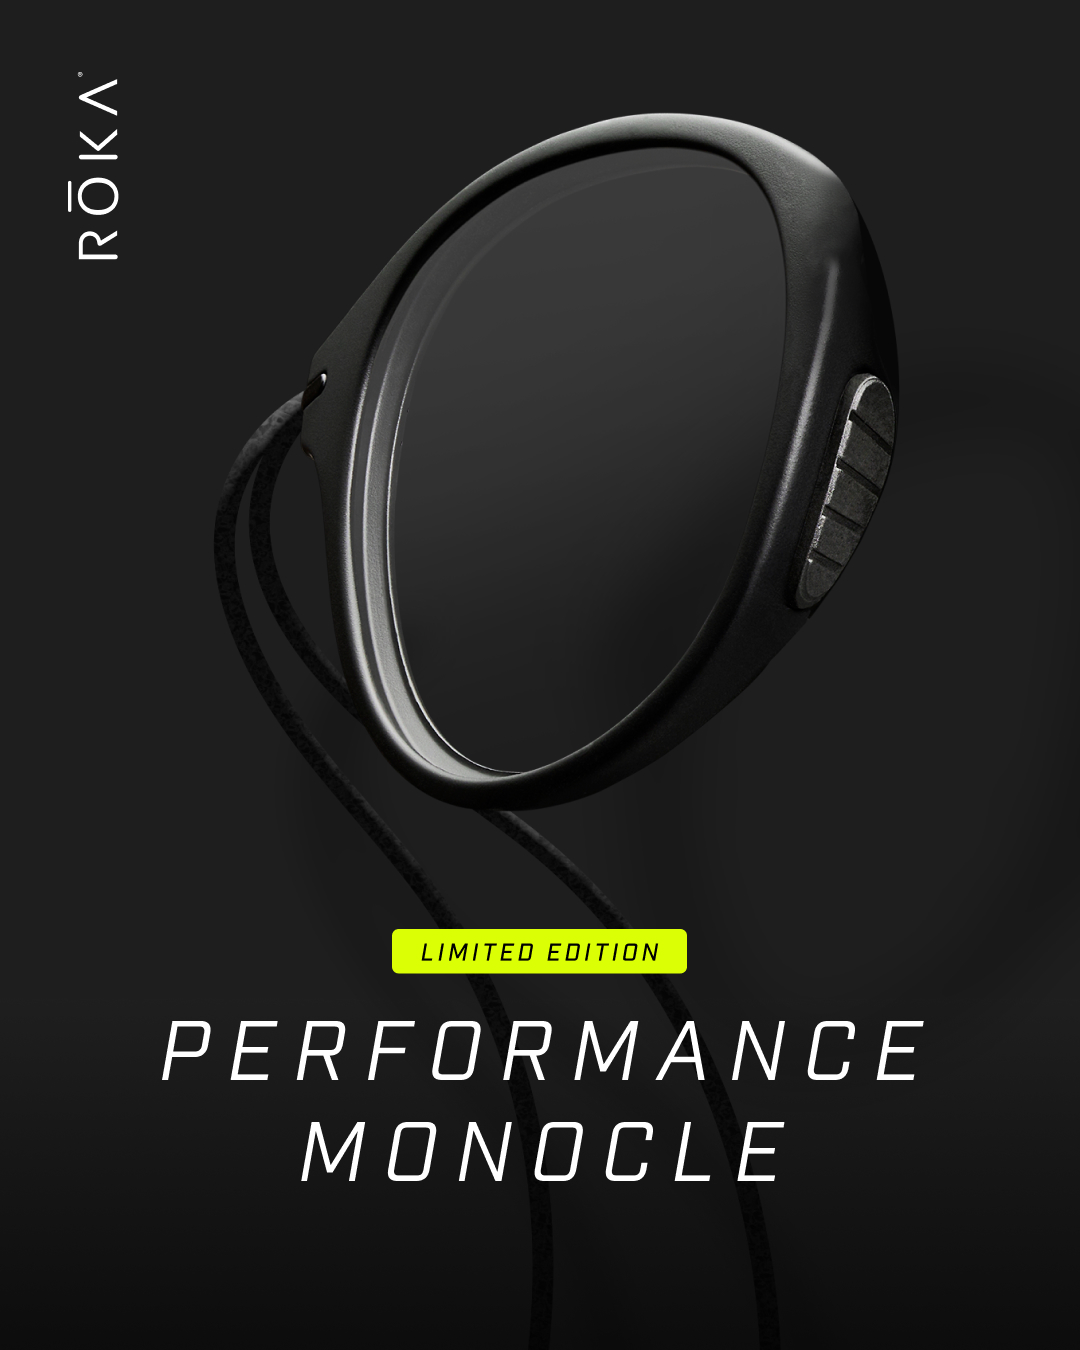 ROKA Launches Ultralight Advanced Performance Eyewear with World